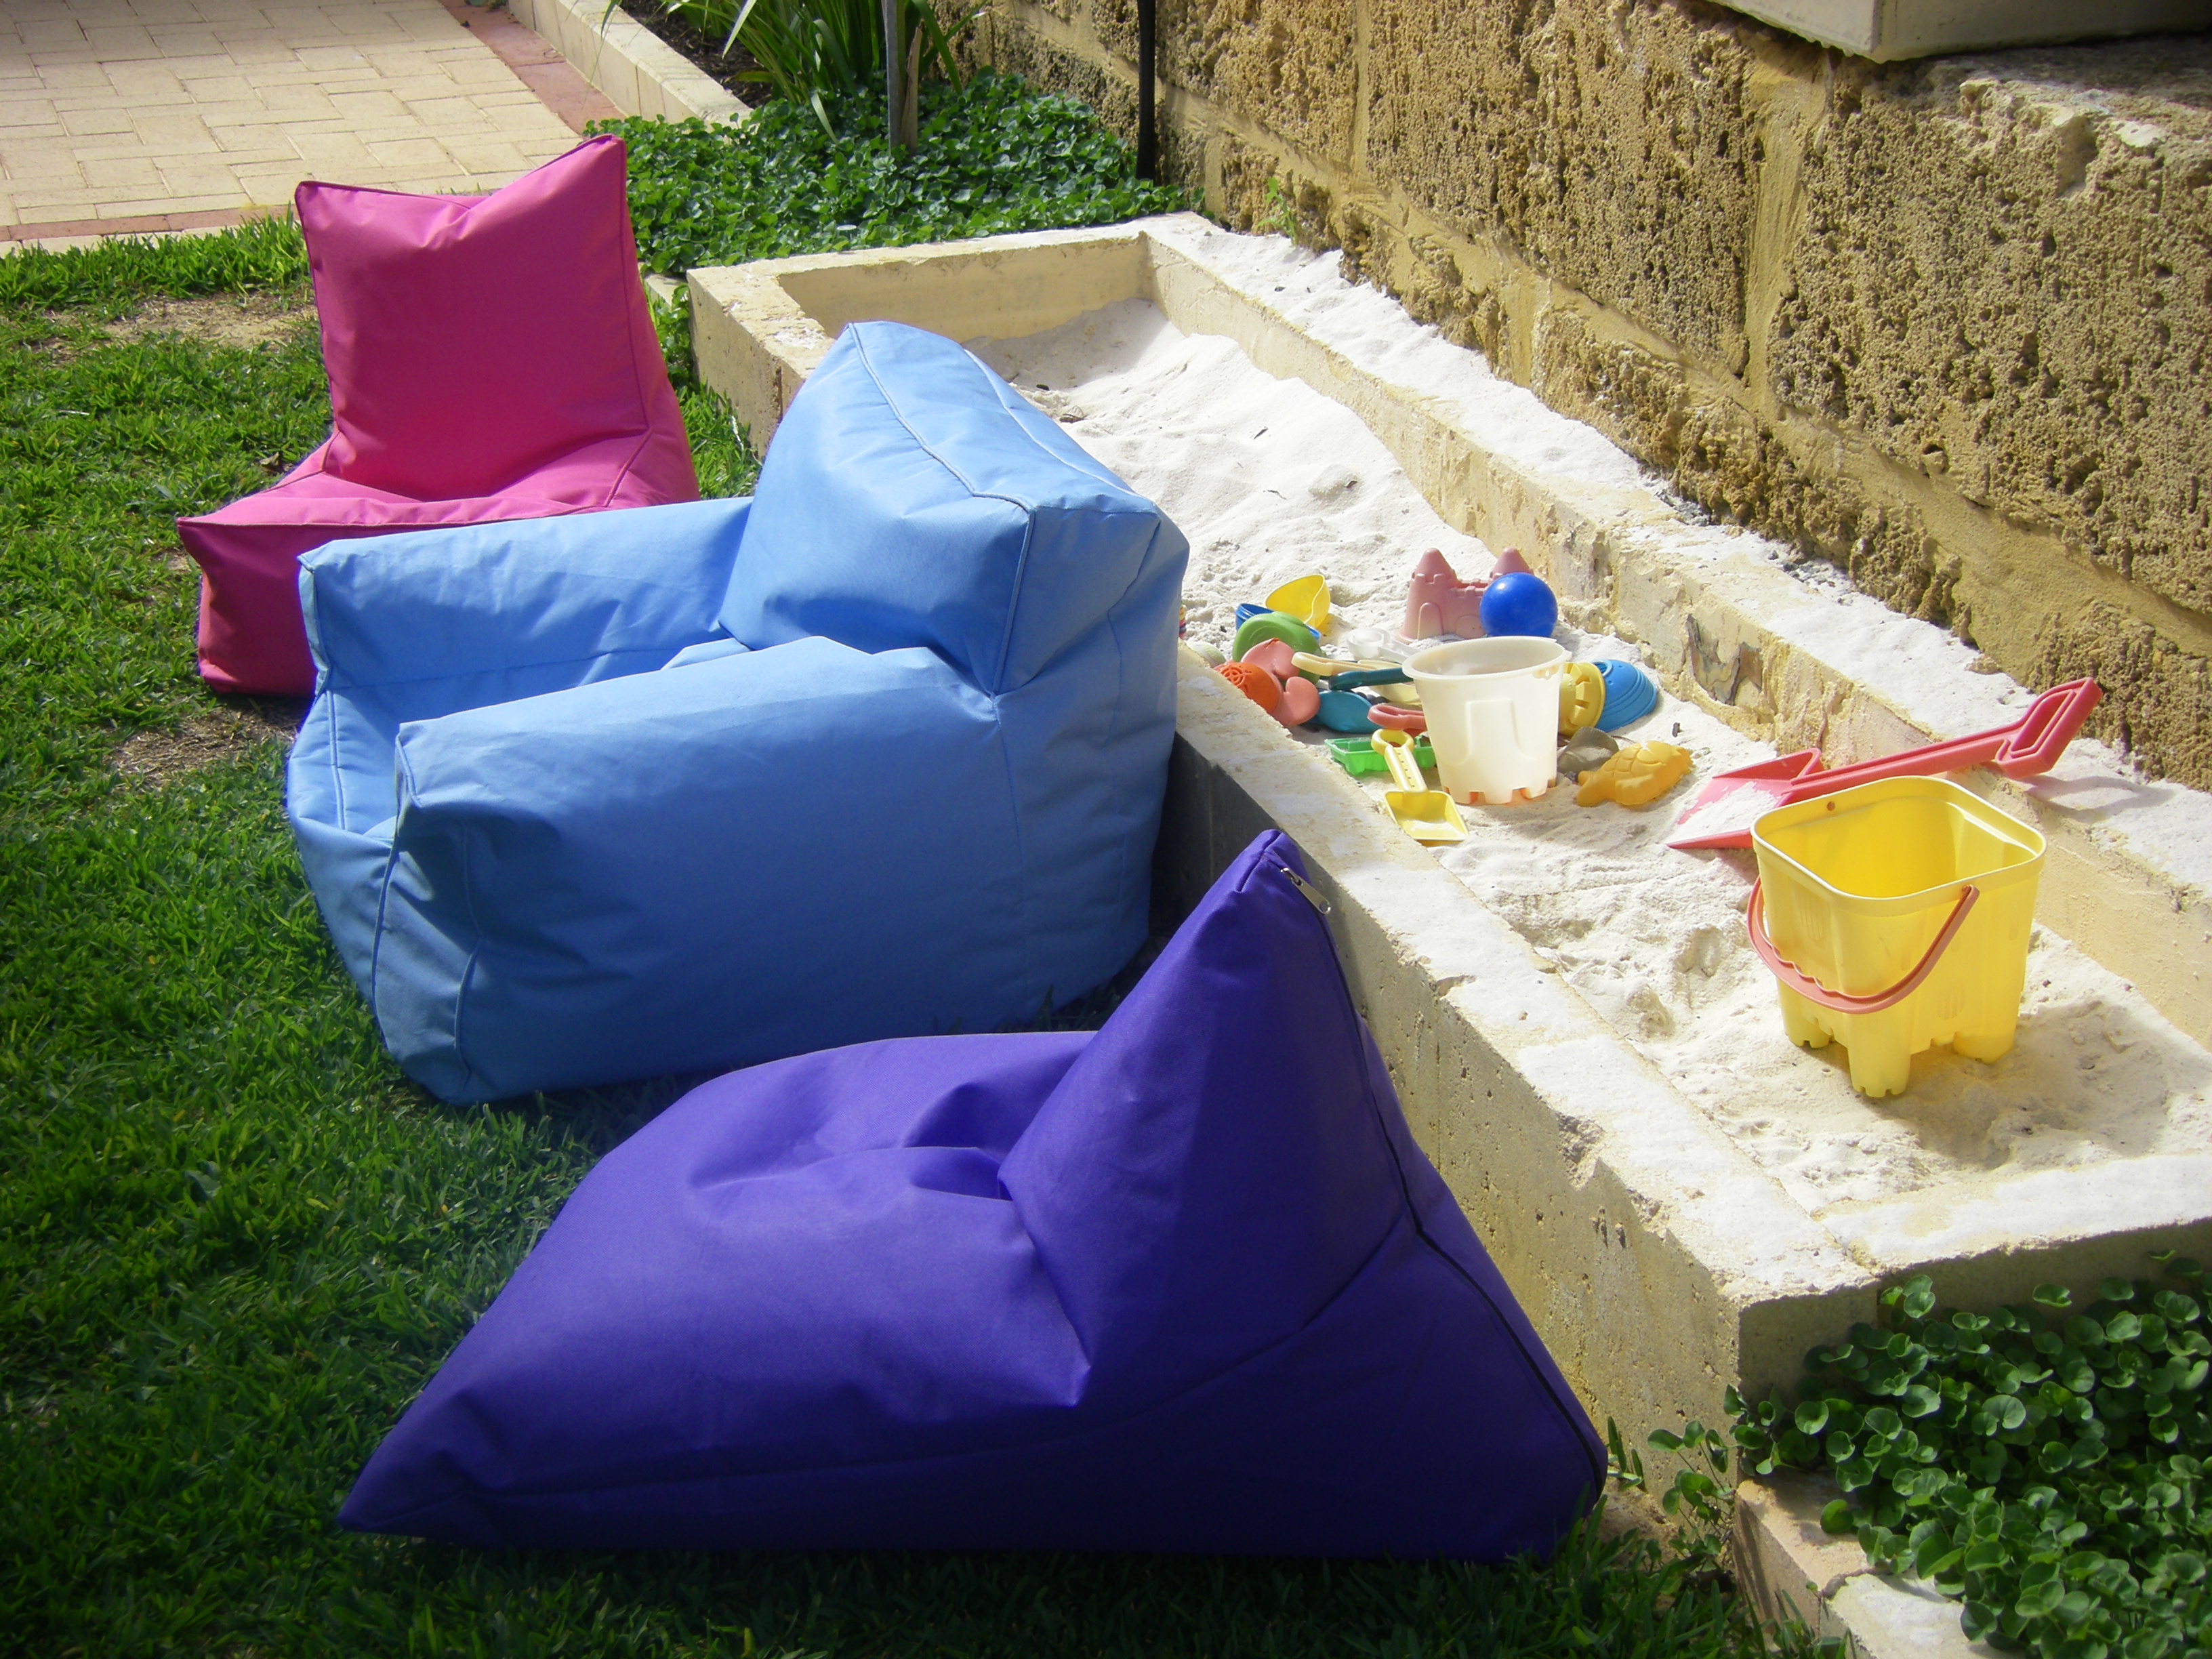 Garden Furniture - outdoor bean bags are perfect!